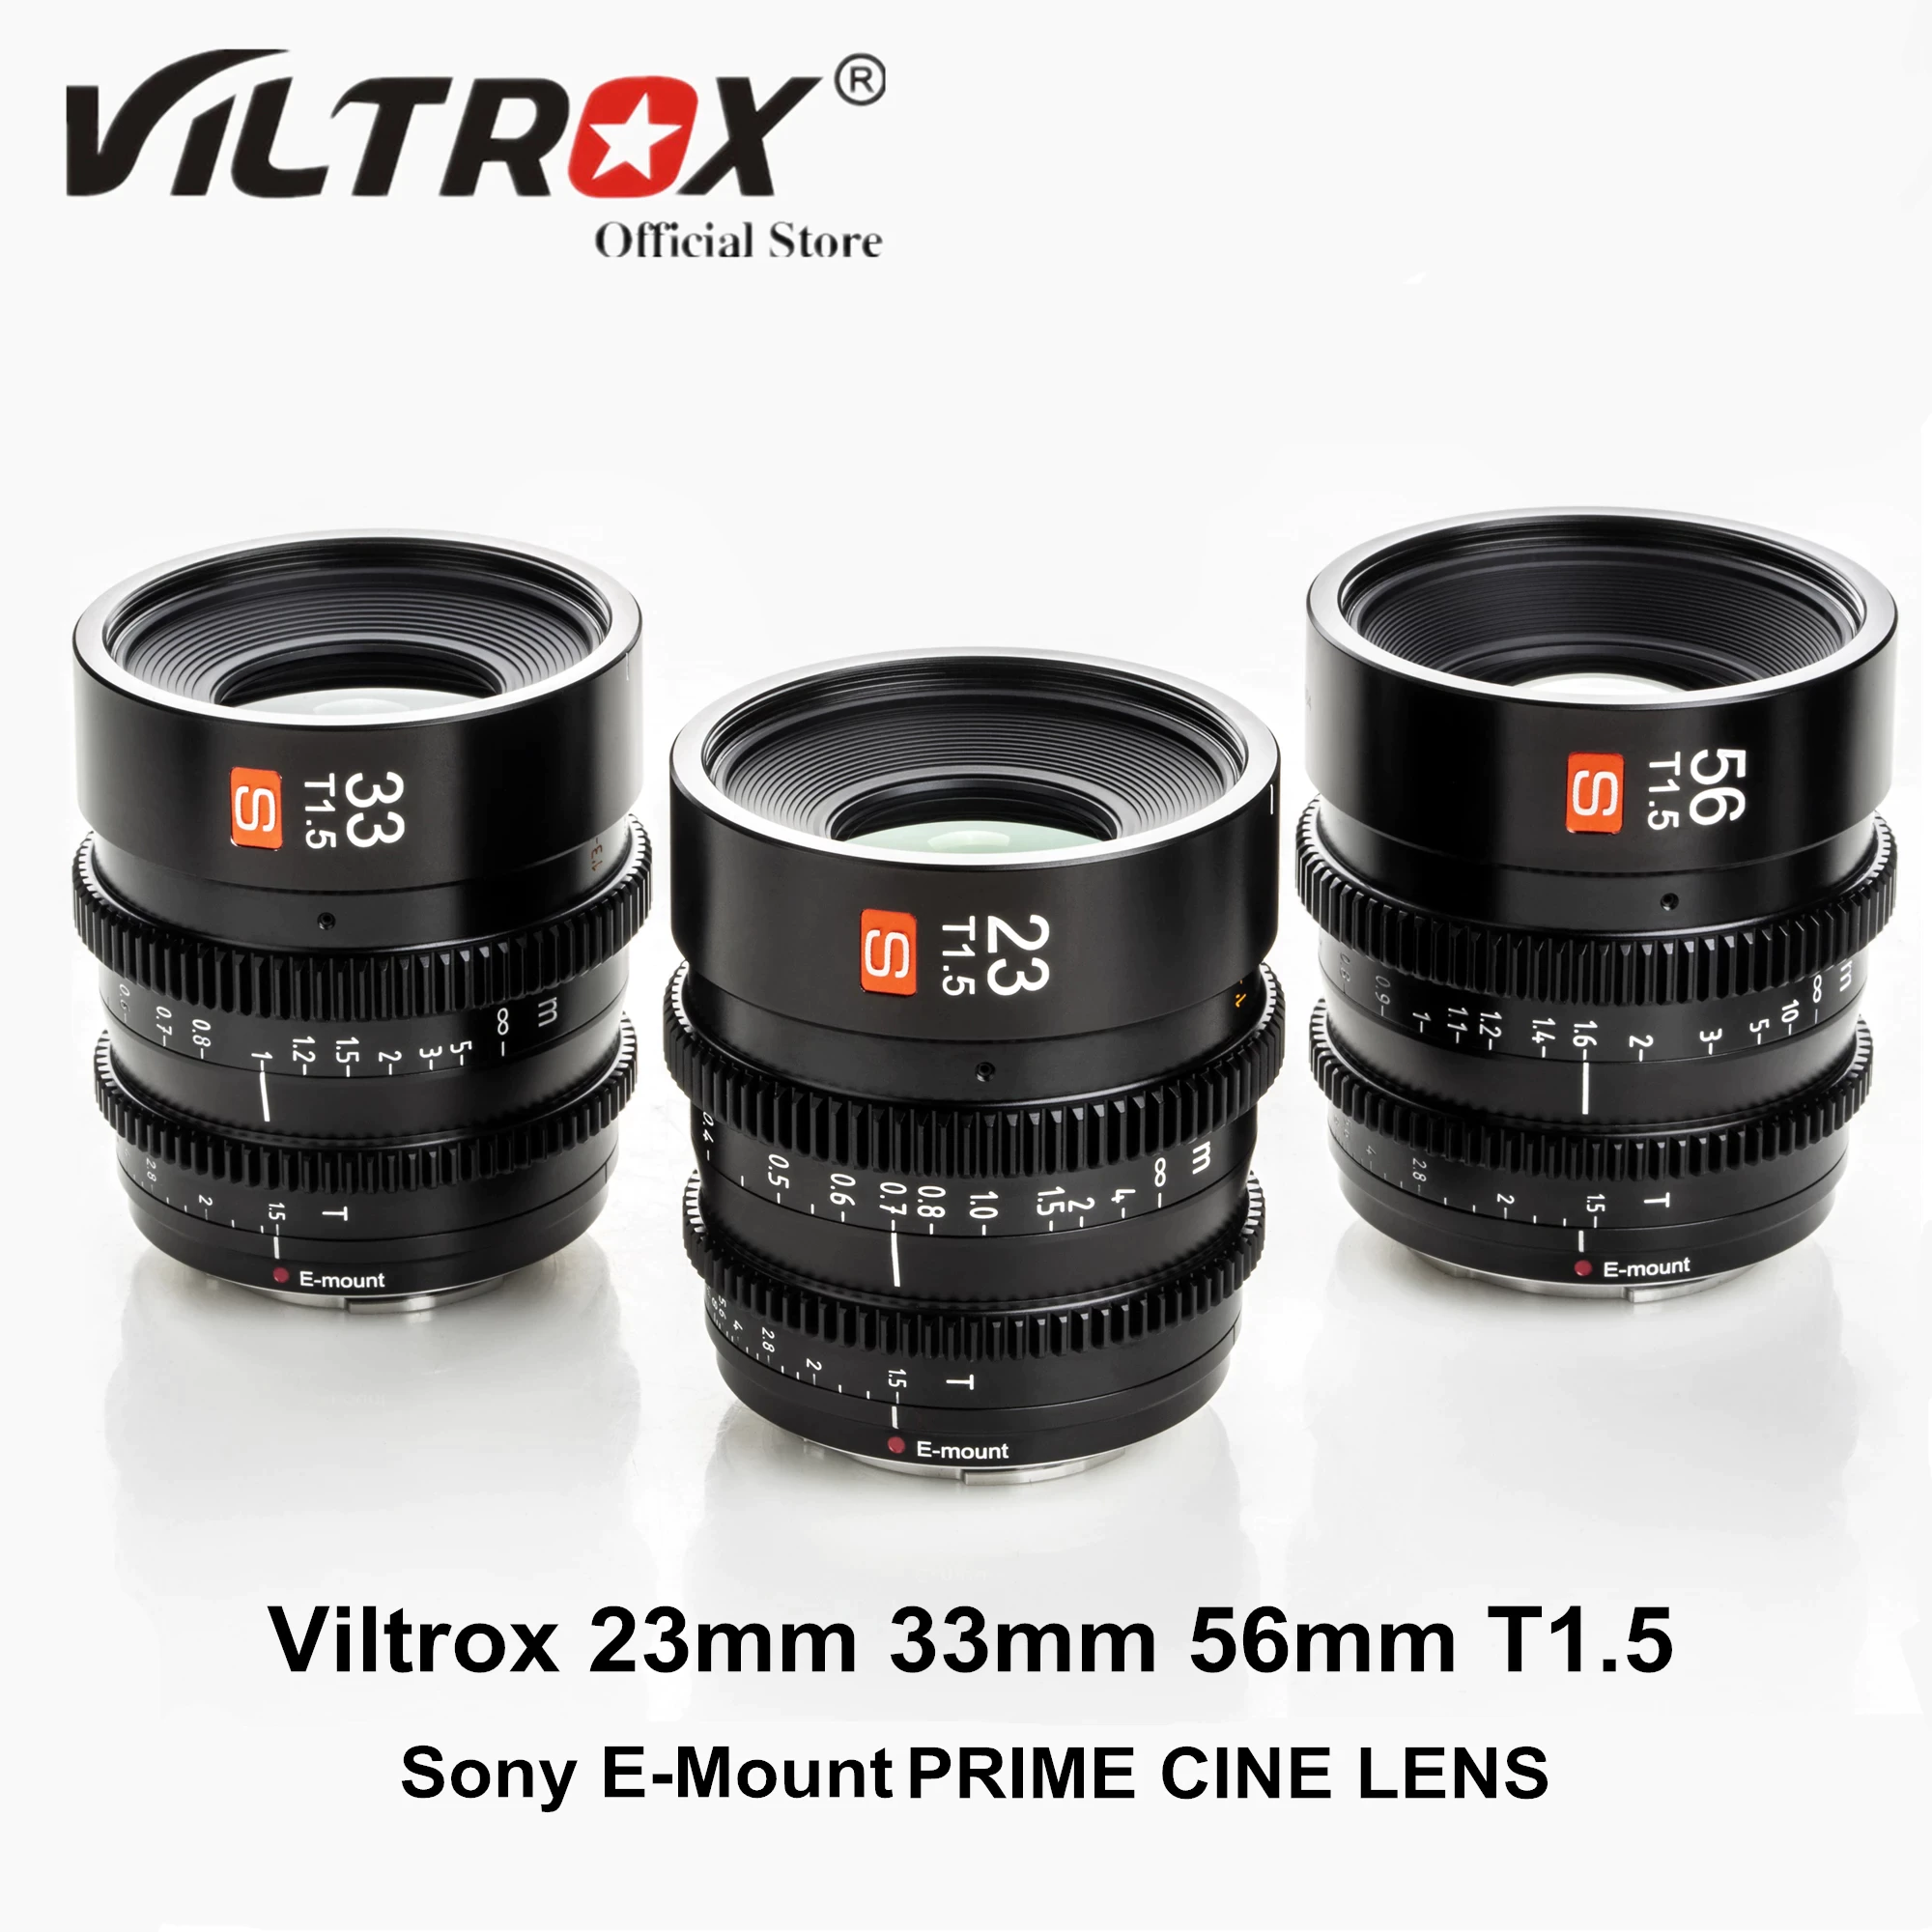 Viltrox 23mm 33mm 56mm T1.5 Cinema Lens Large Aperture Manual Focus Prime Mini Cine Lens Low Distortion Filming Vlogger for Sony E Mount Camera